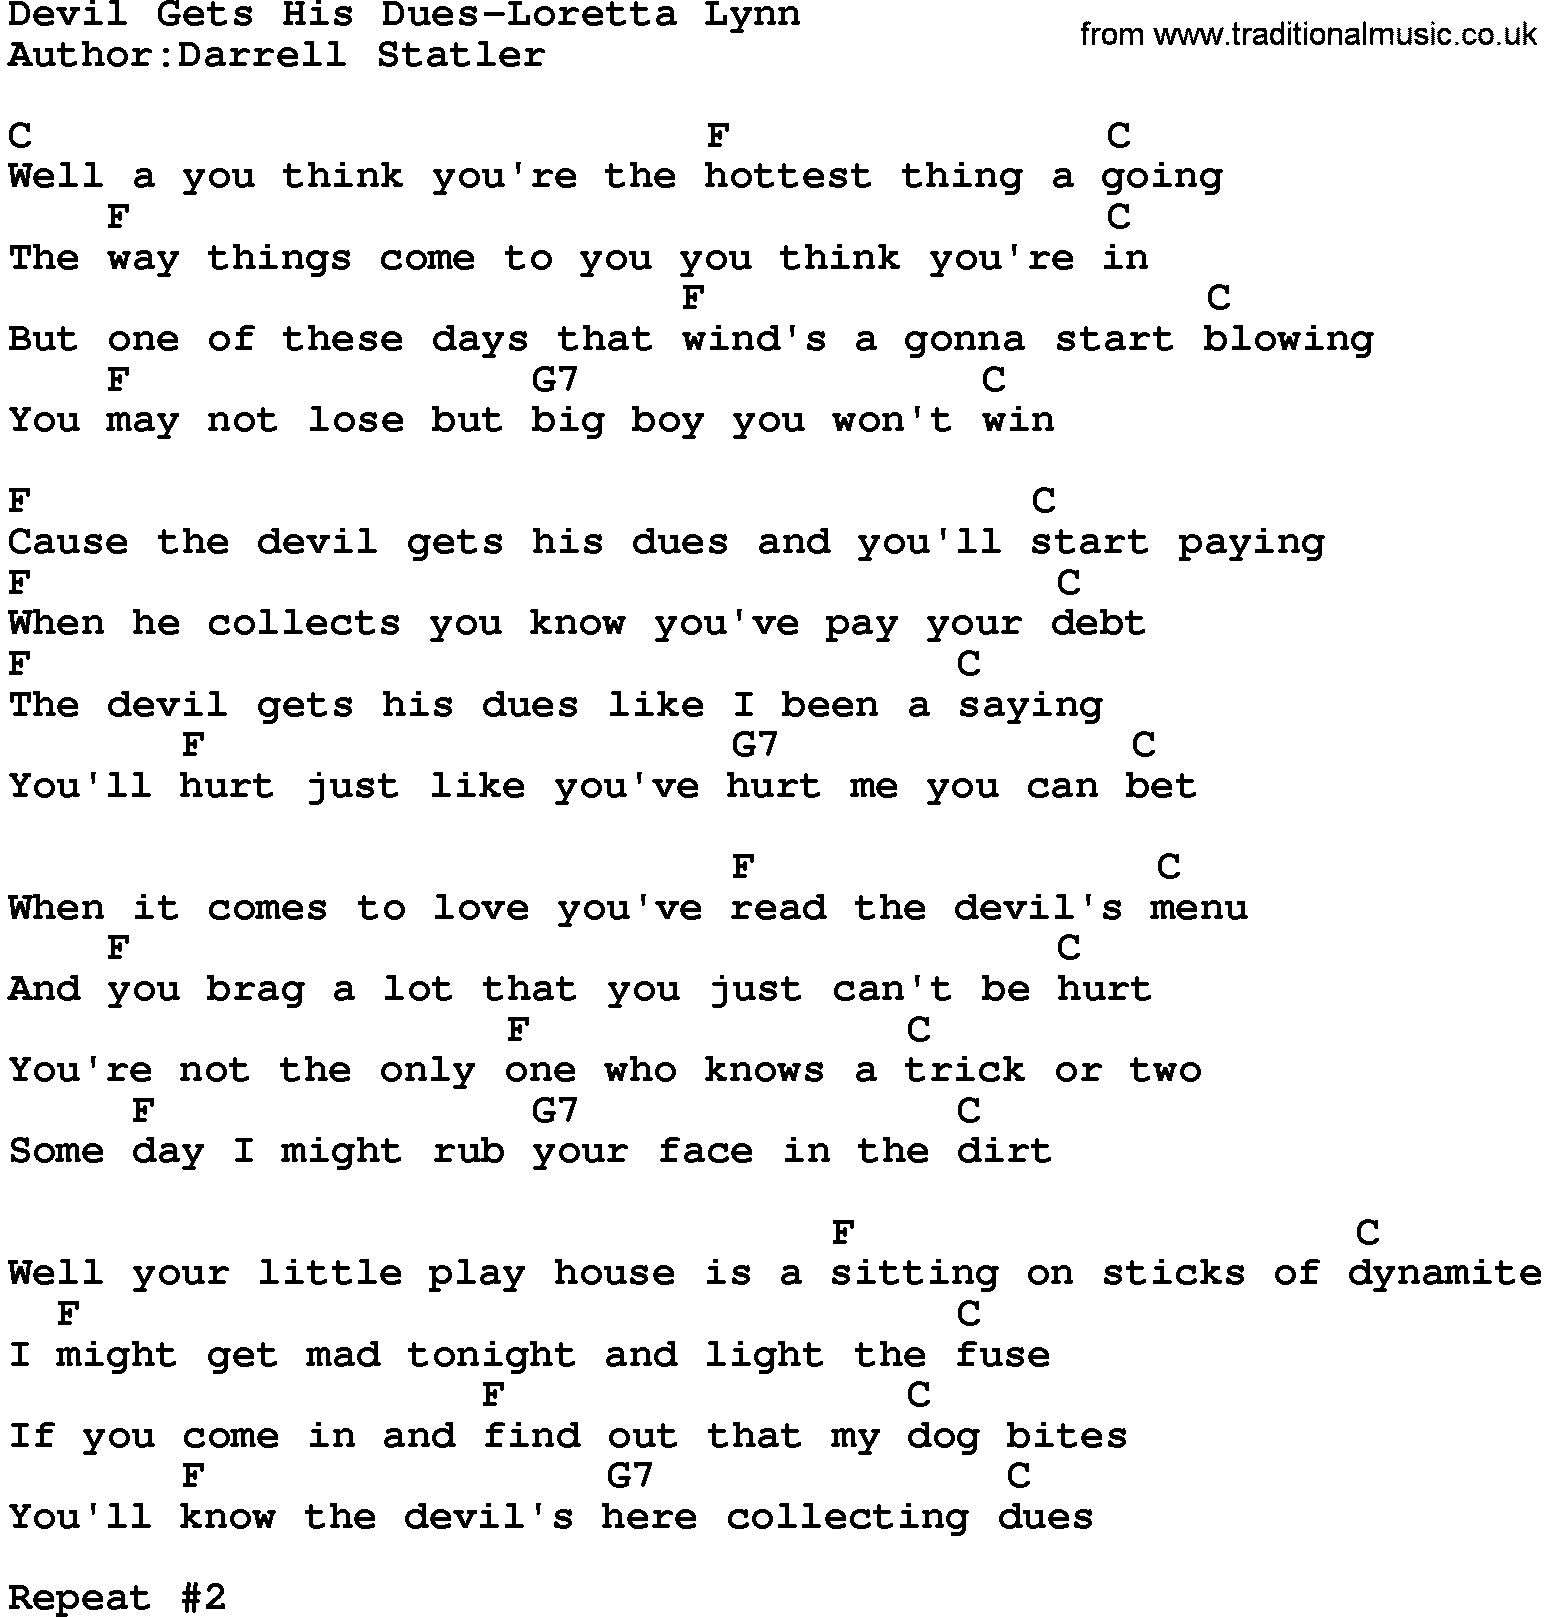 Country music song: Devil Gets His Dues-Loretta Lynn lyrics and chords